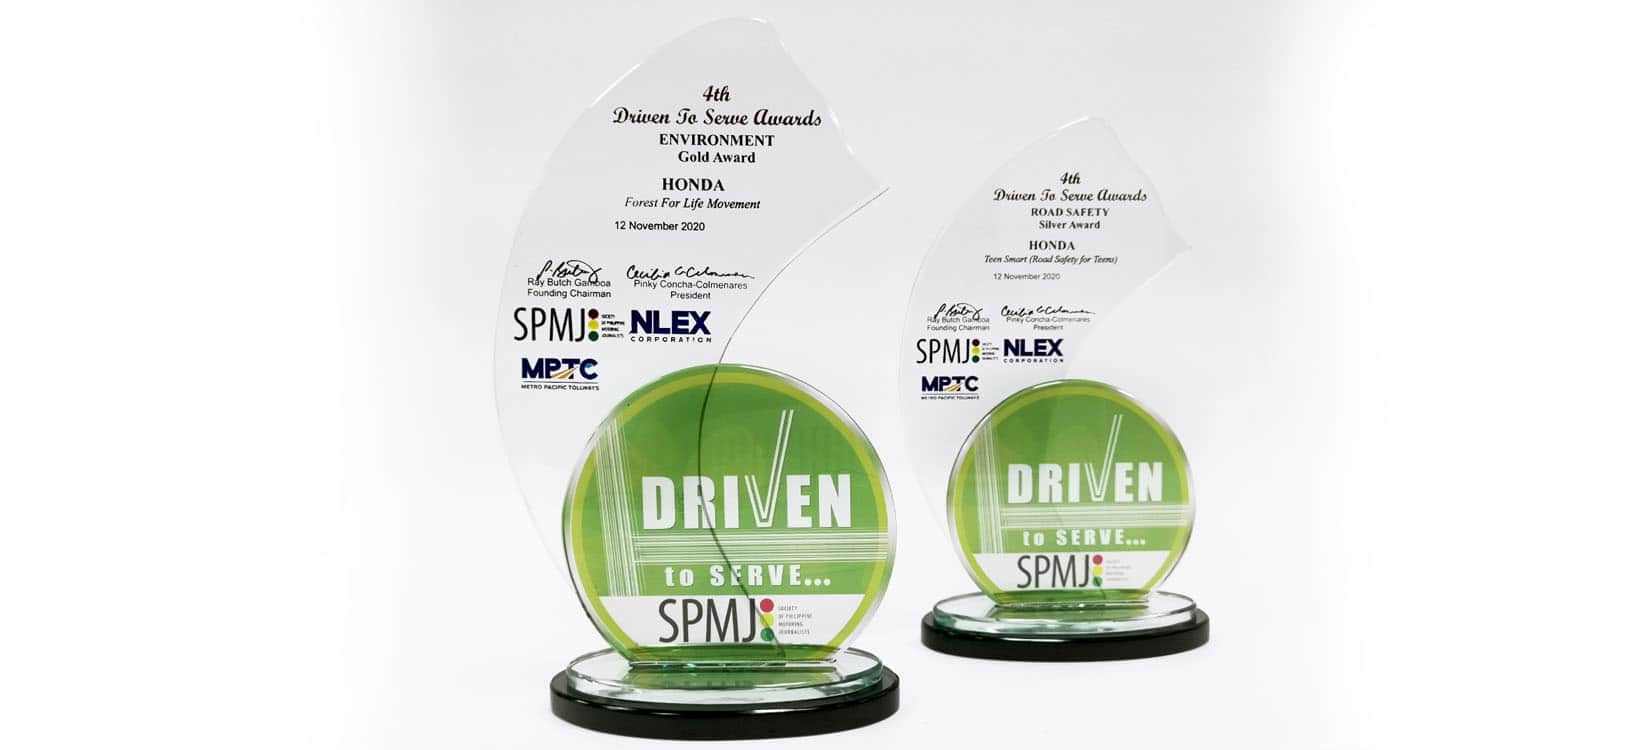 Hondaâ€™s CSR efforts recognized at 4th SPMJ â€˜Driven to Serveâ€™ awards